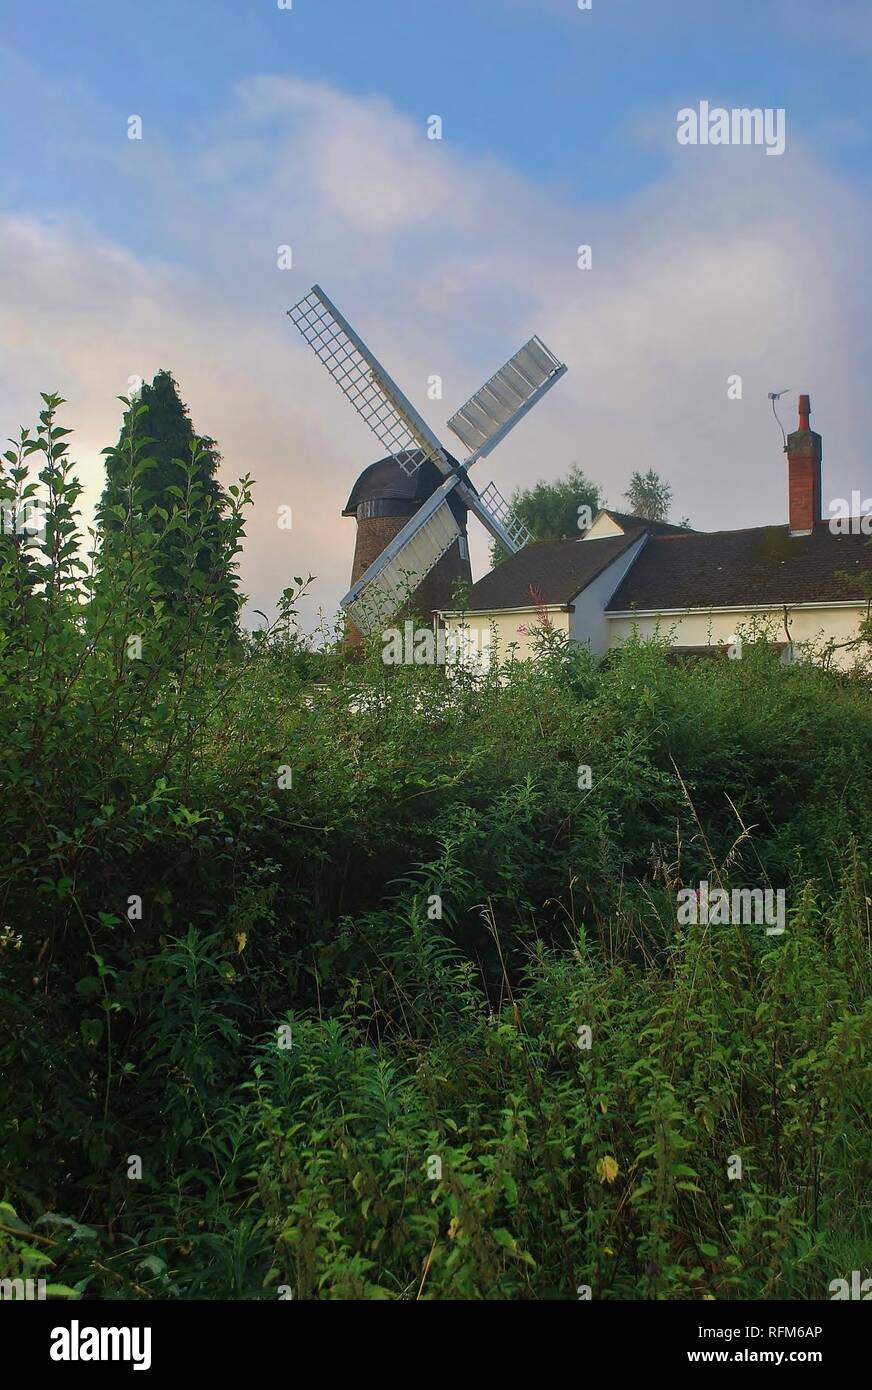 Balsall Common Windmill, Berkswell, Warwickshire (19609021819). Stock Photo